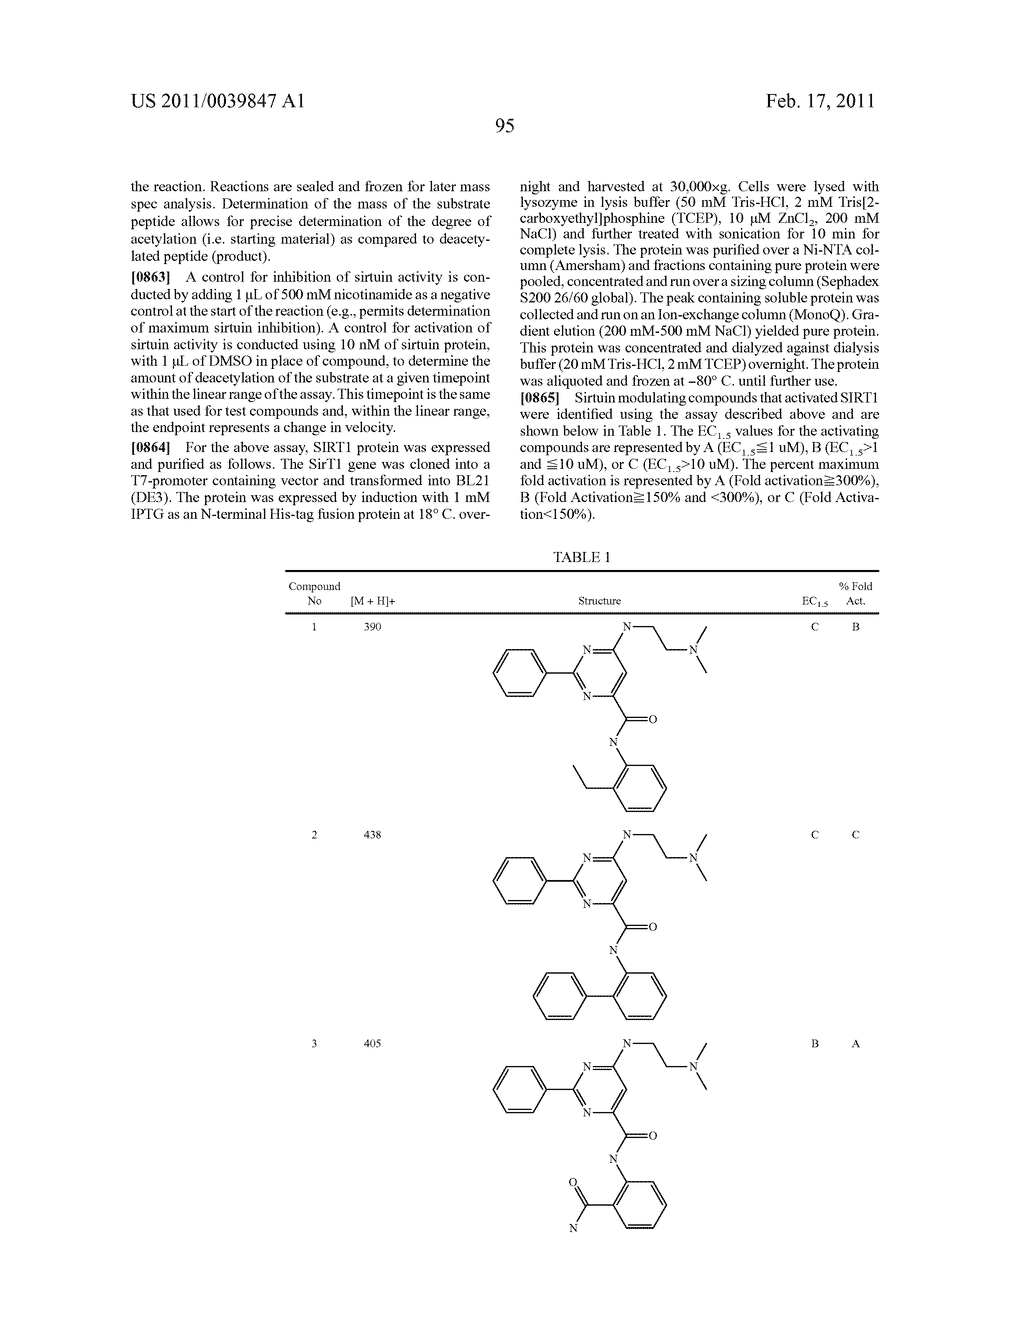 AMIDE DERIVATIVES AS SIRTUIN MODULATORS - diagram, schematic, and image 96